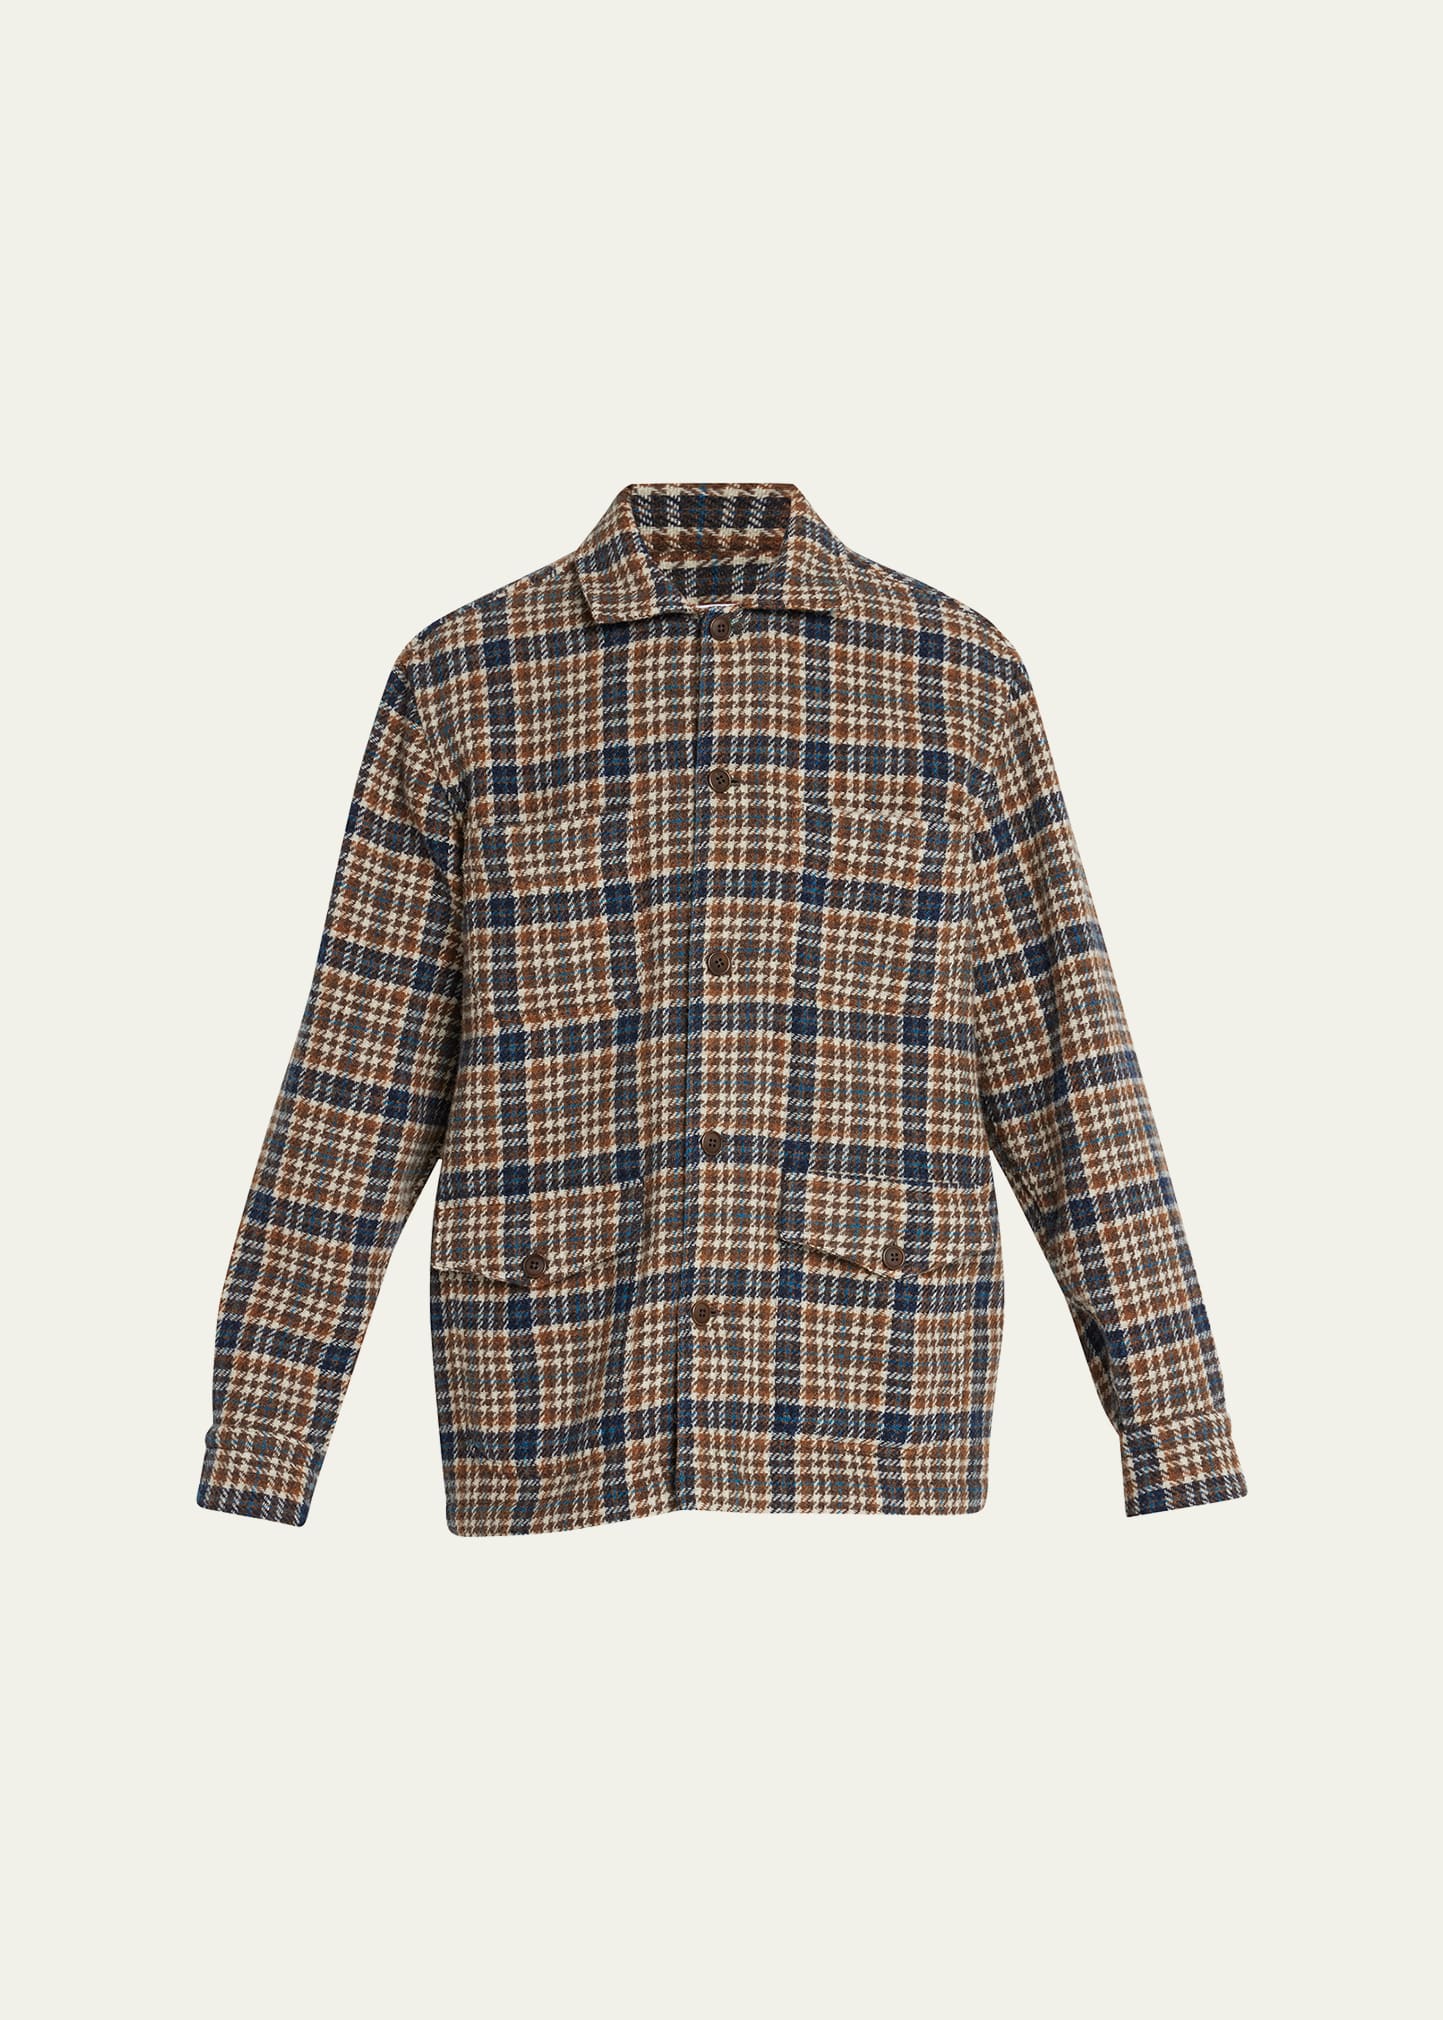 Men's Wool Plaid Shirt Jacket